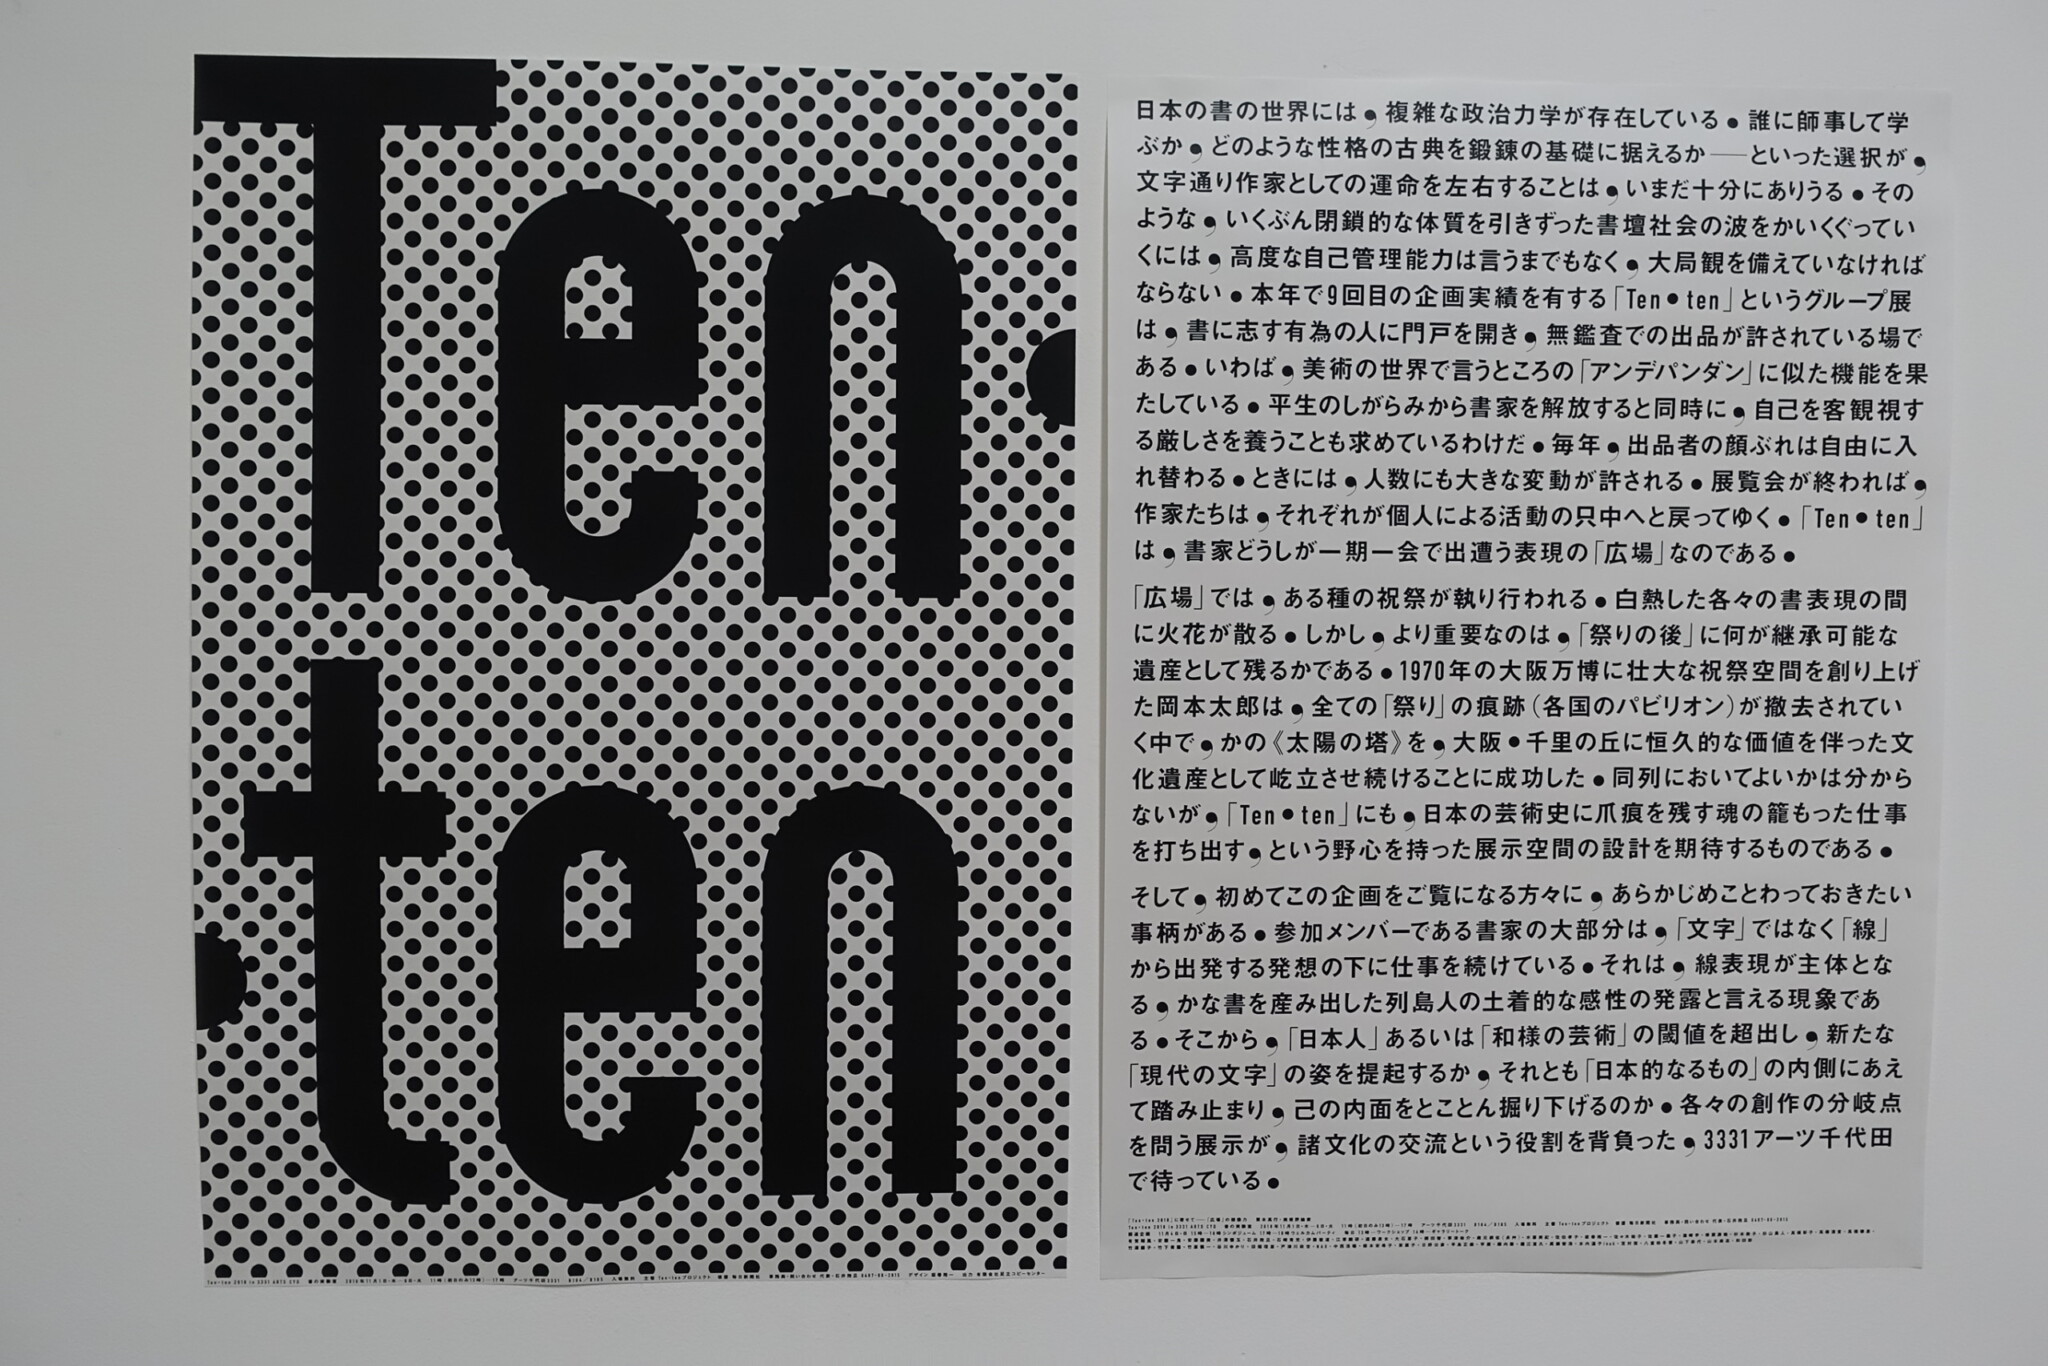 Ten・ten 2018 in 3331 ARTS CYD 書の実験室＠アーツ千代田 3331